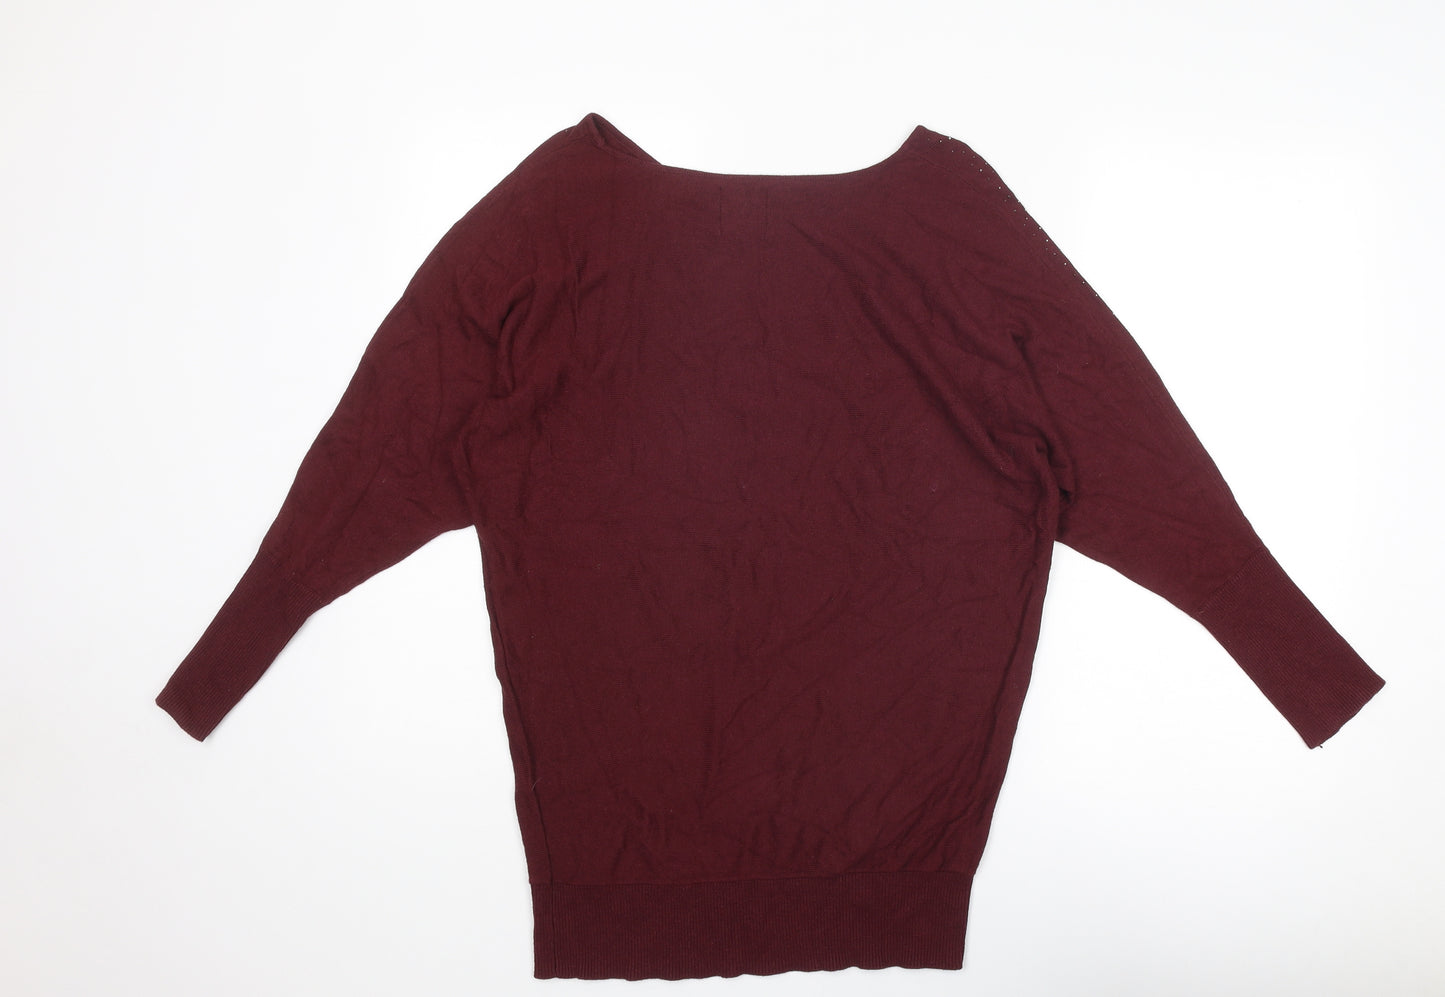 Debenhams Womens Purple Round Neck Cotton Pullover Jumper Size 12